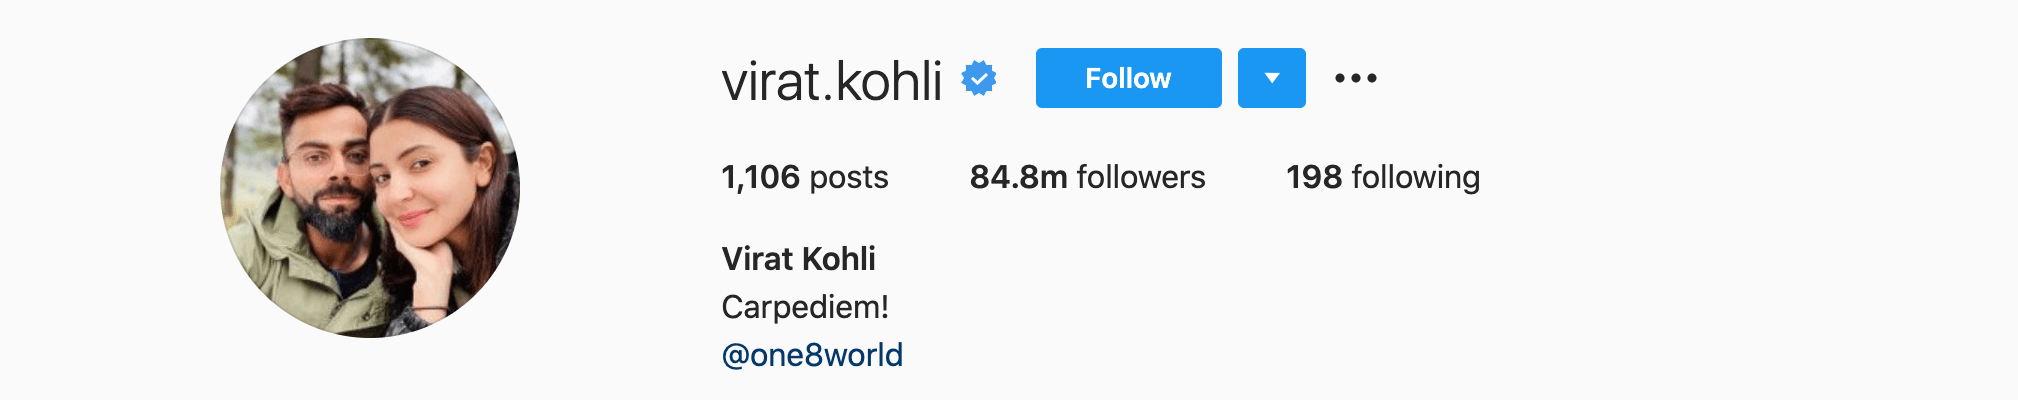 Top Instagram Influencers - VIRAT KOHLI